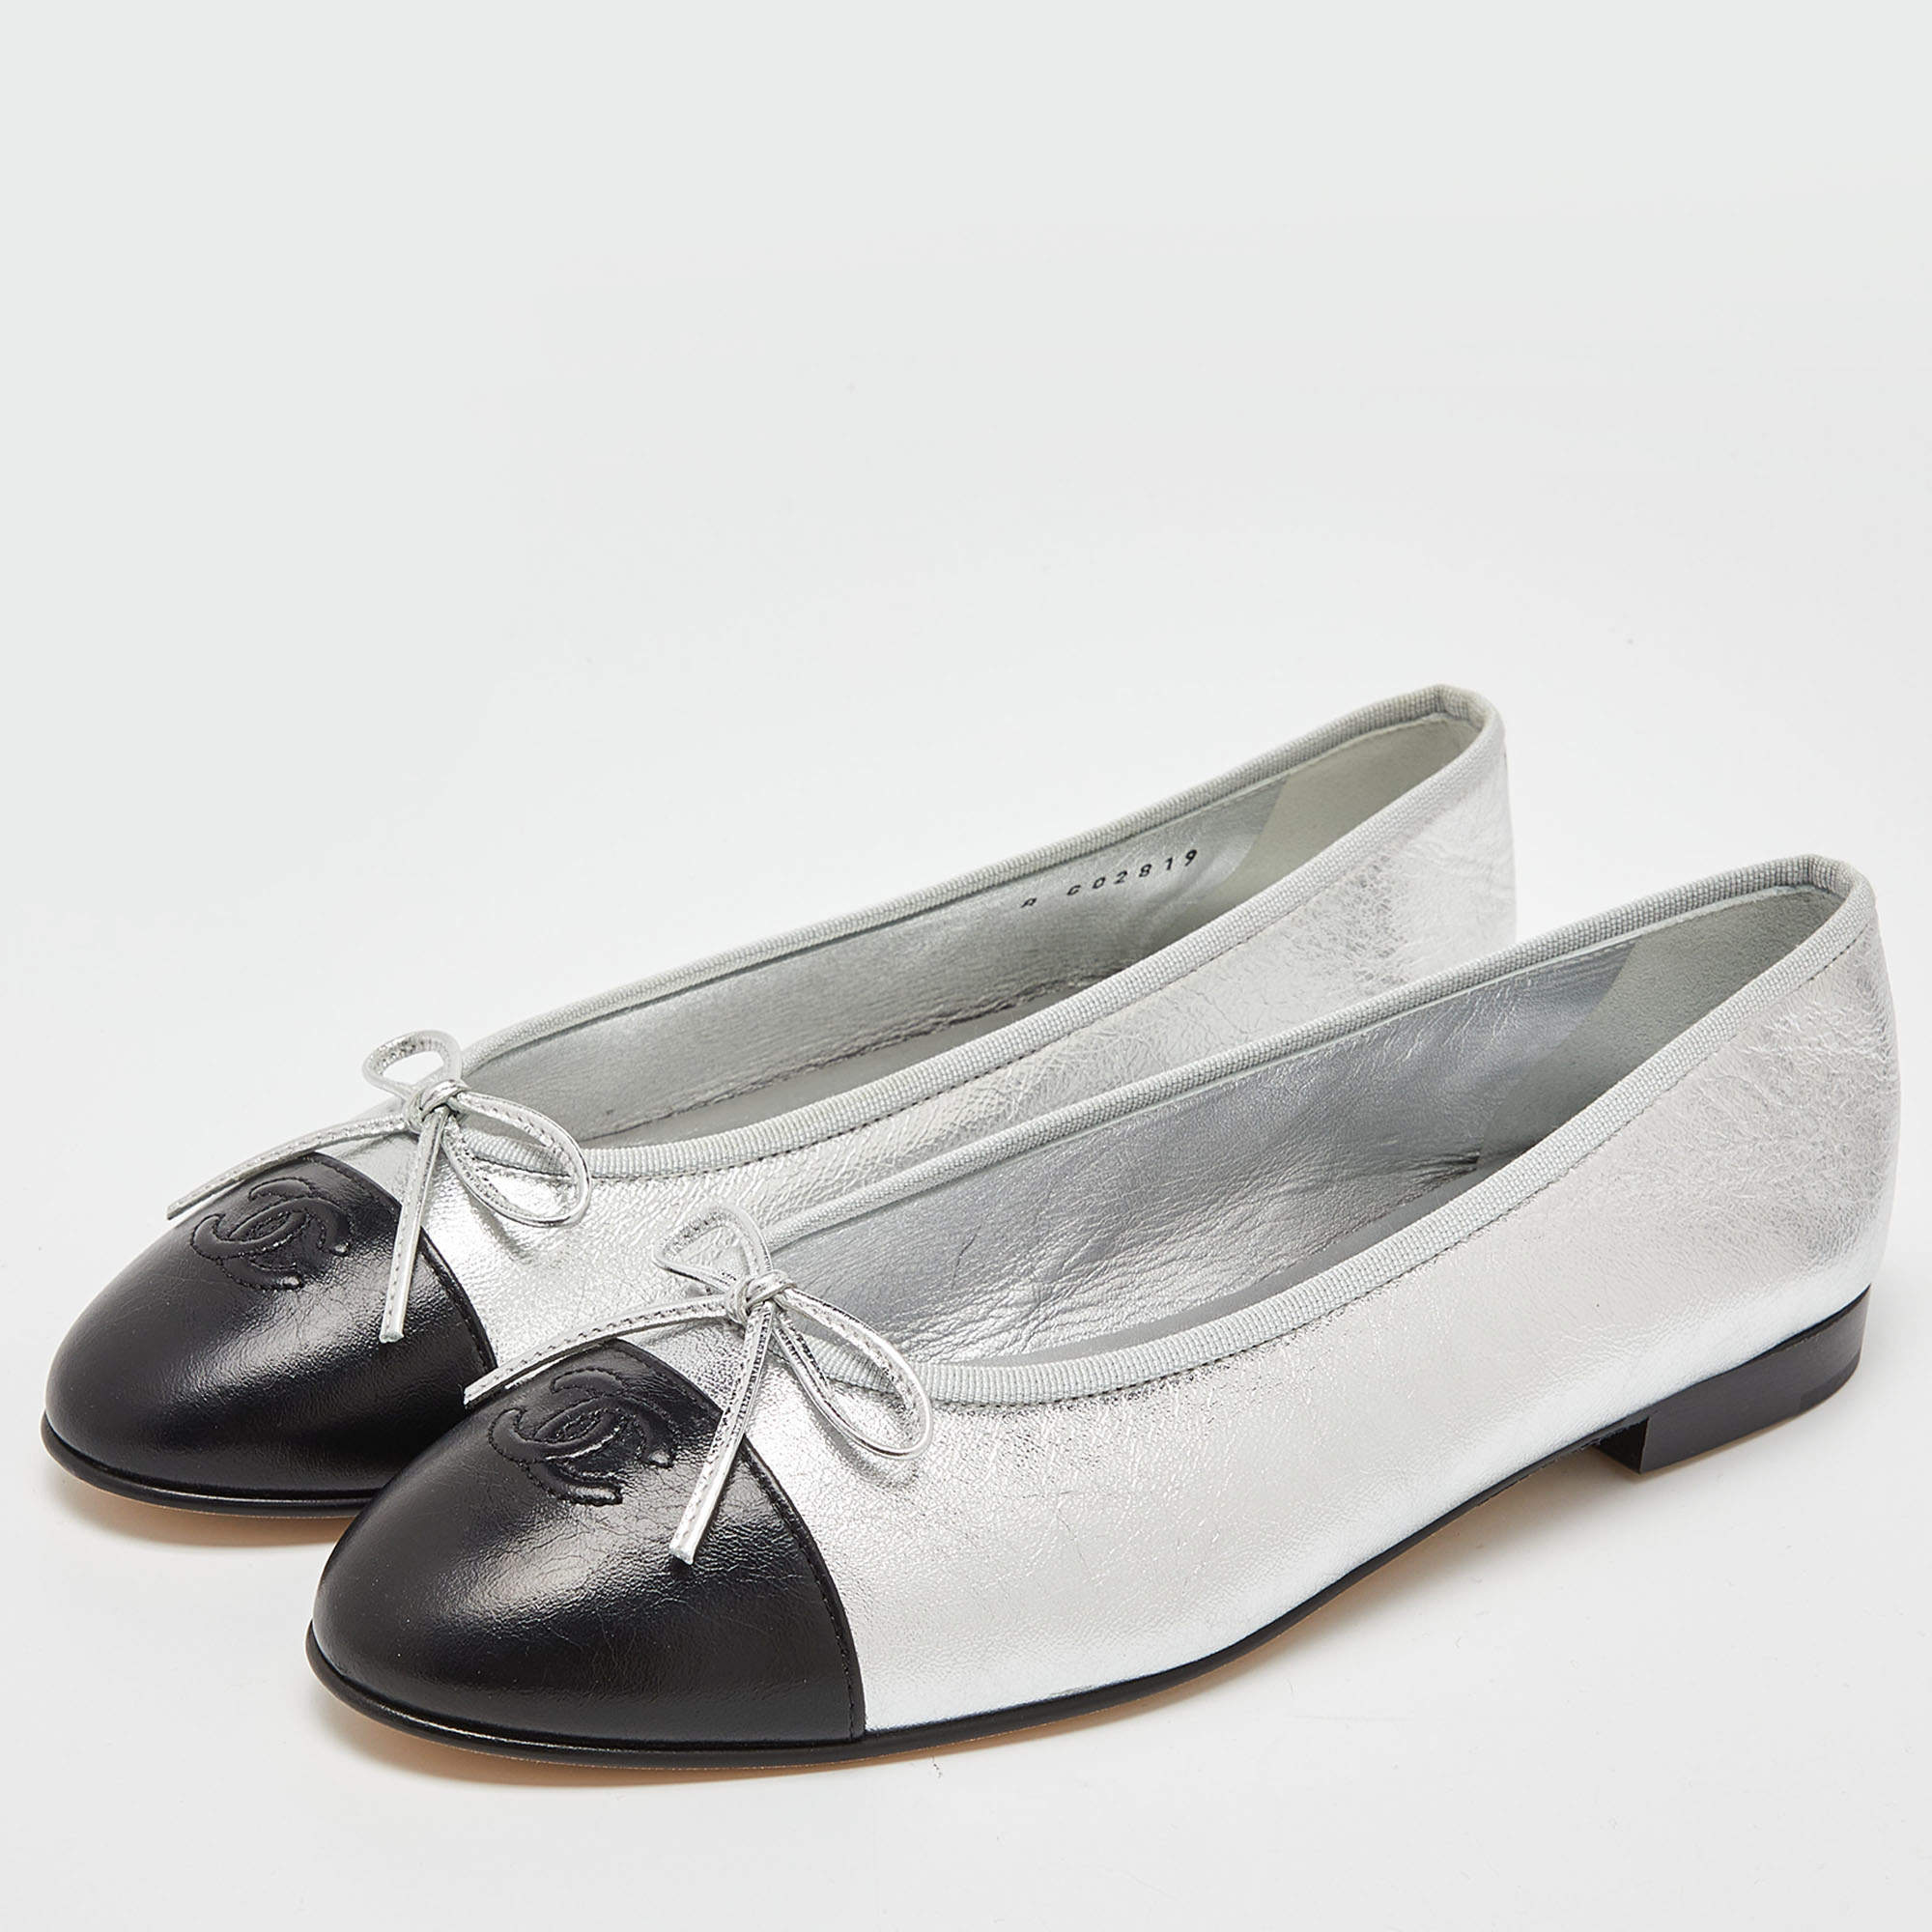 Chanel Ballerina Flats Silver/Black Leather Sz. 36.5